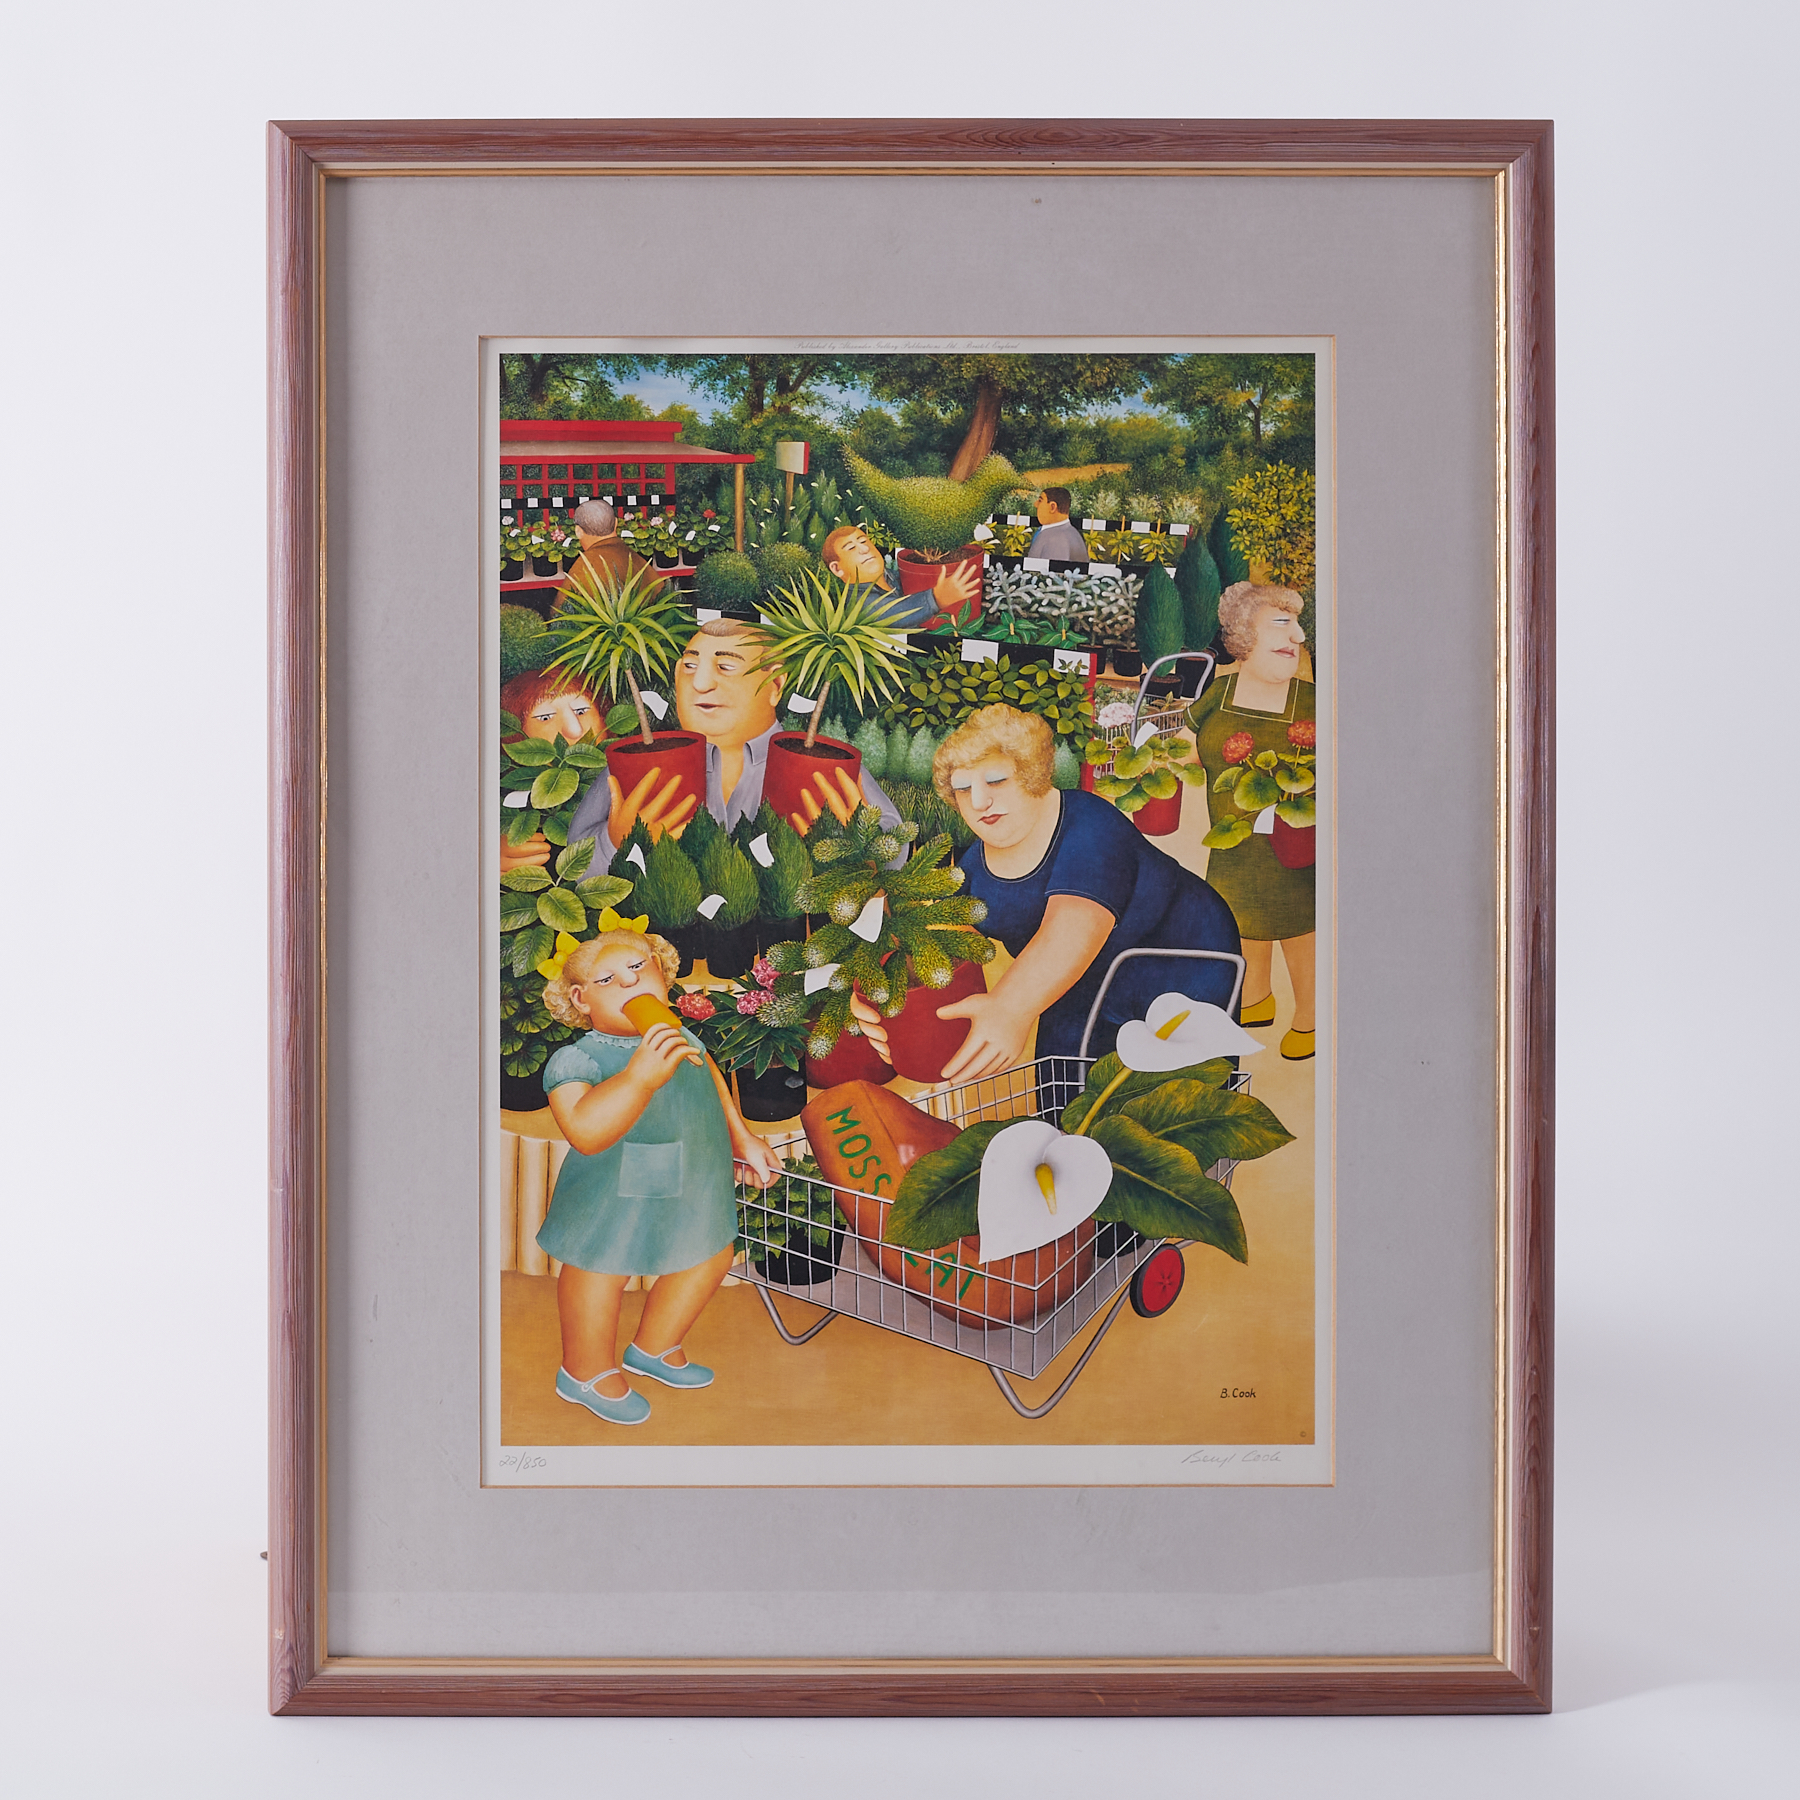 Beryl Cook (1926-2008) 'Garden Centre' signed limited edition print 22/850, 51cm x 38cm, framed